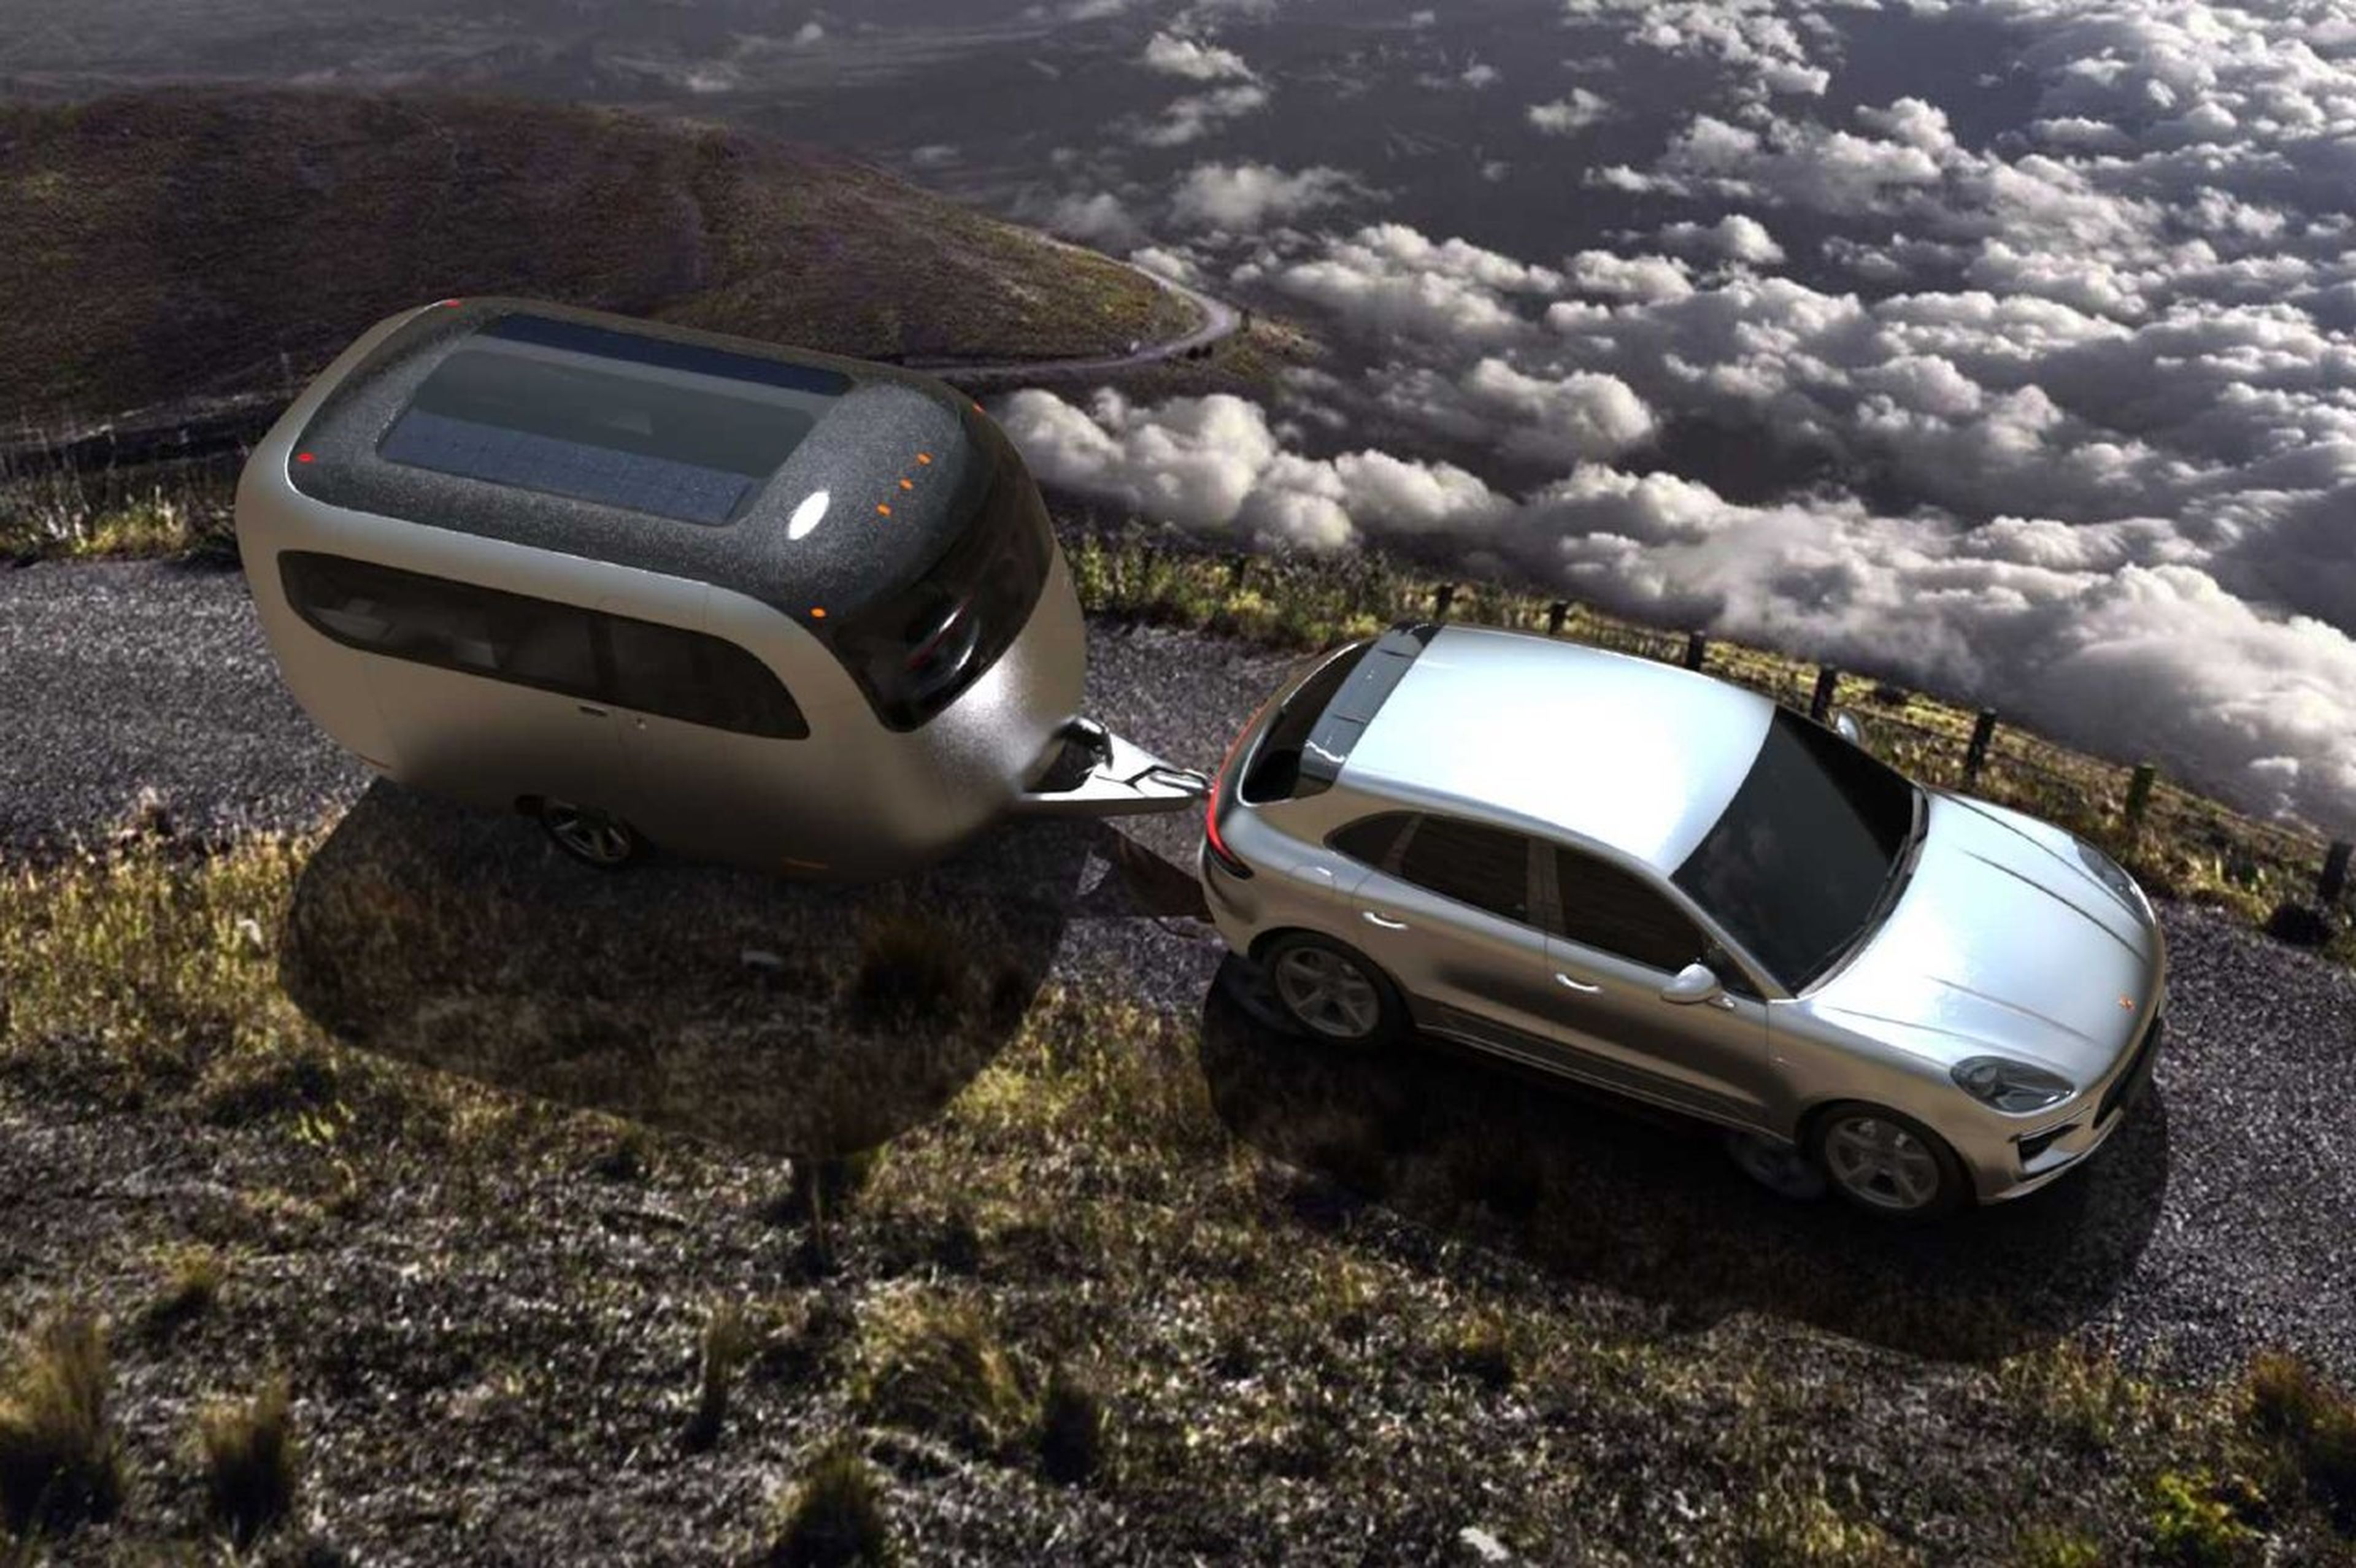 Airstream Studio F.A. Porsche Concept Travel Trailer